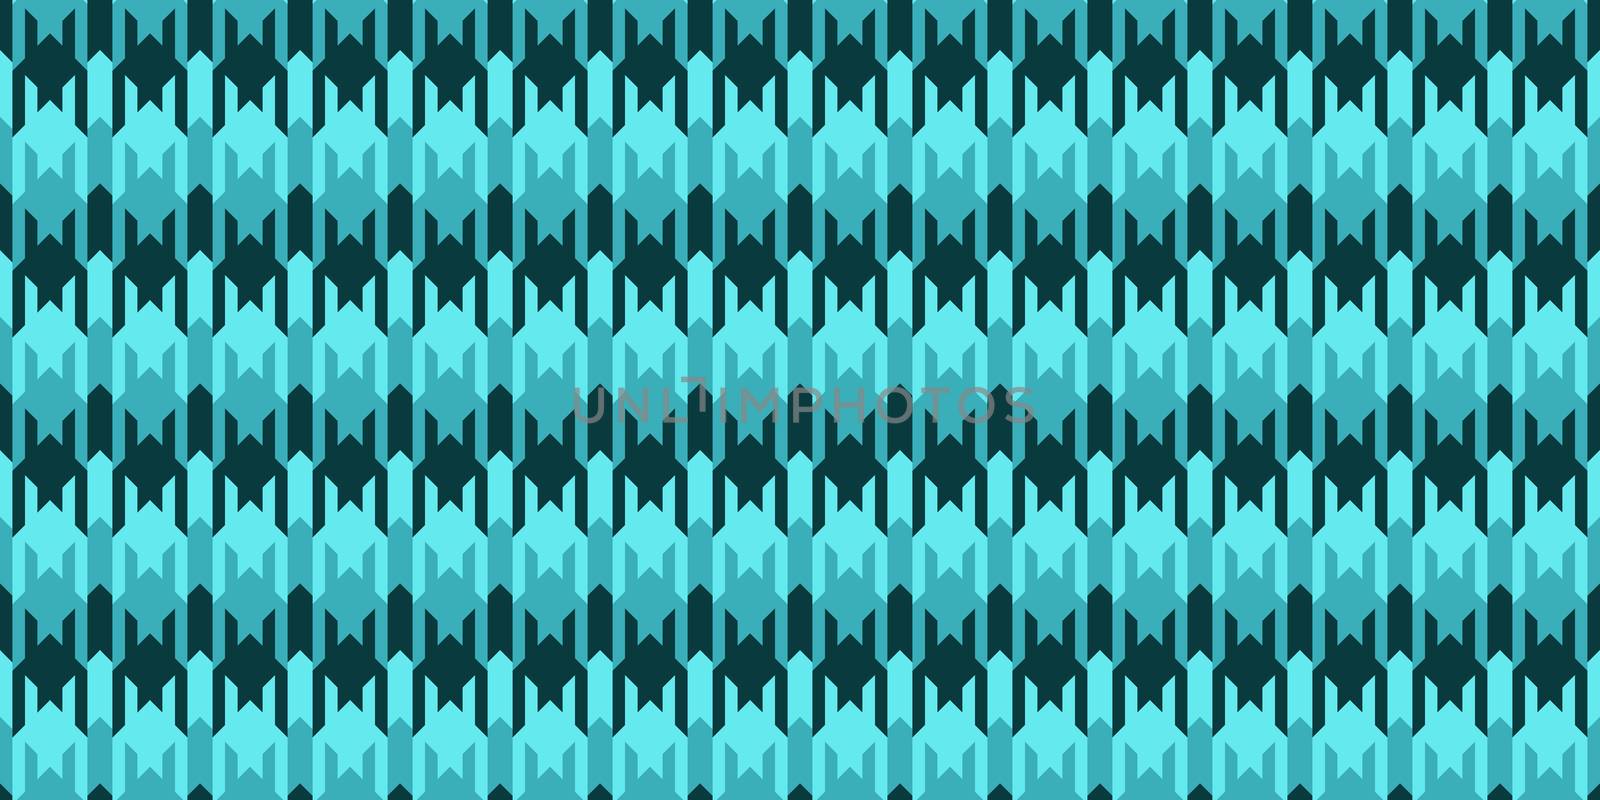 Deep Dark Sea Blue Chevron Geometry Background. Seamless Zigzag Texture. Modern Striped Pattern. by sanches812